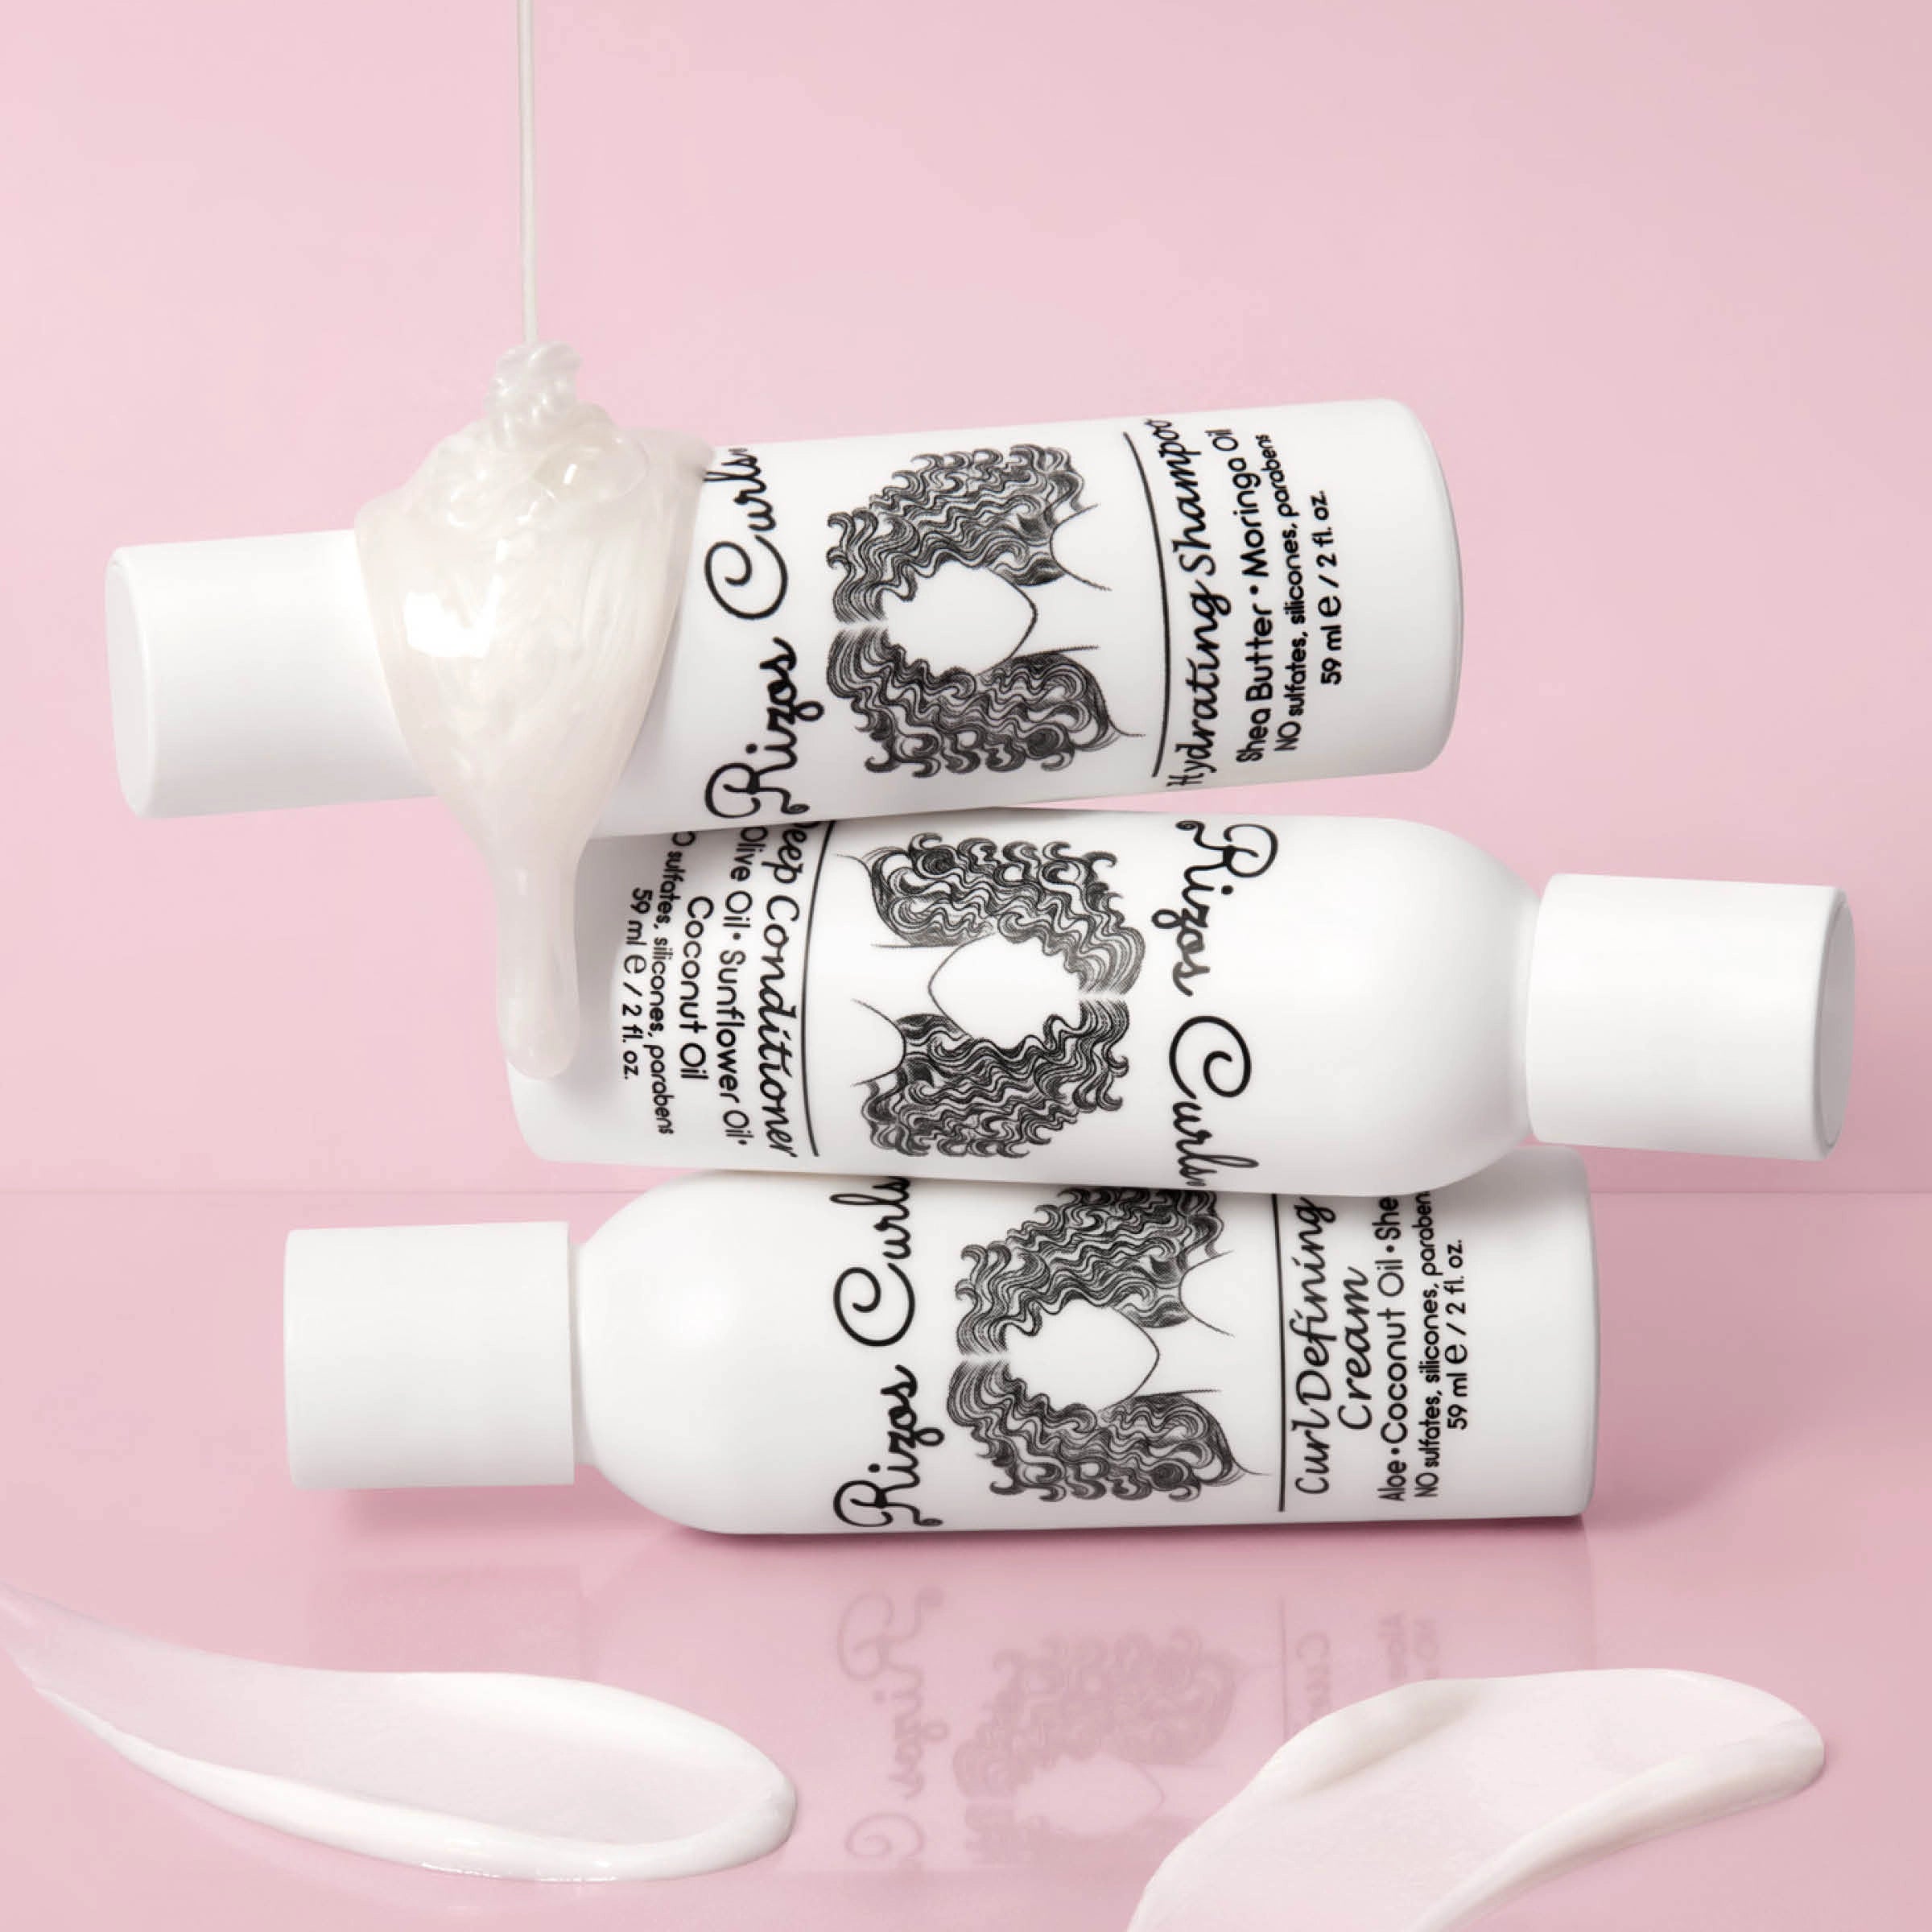 Rizos Curls Travel Kit Trio: Curl Defining Cream, Shampoo, Conditioner